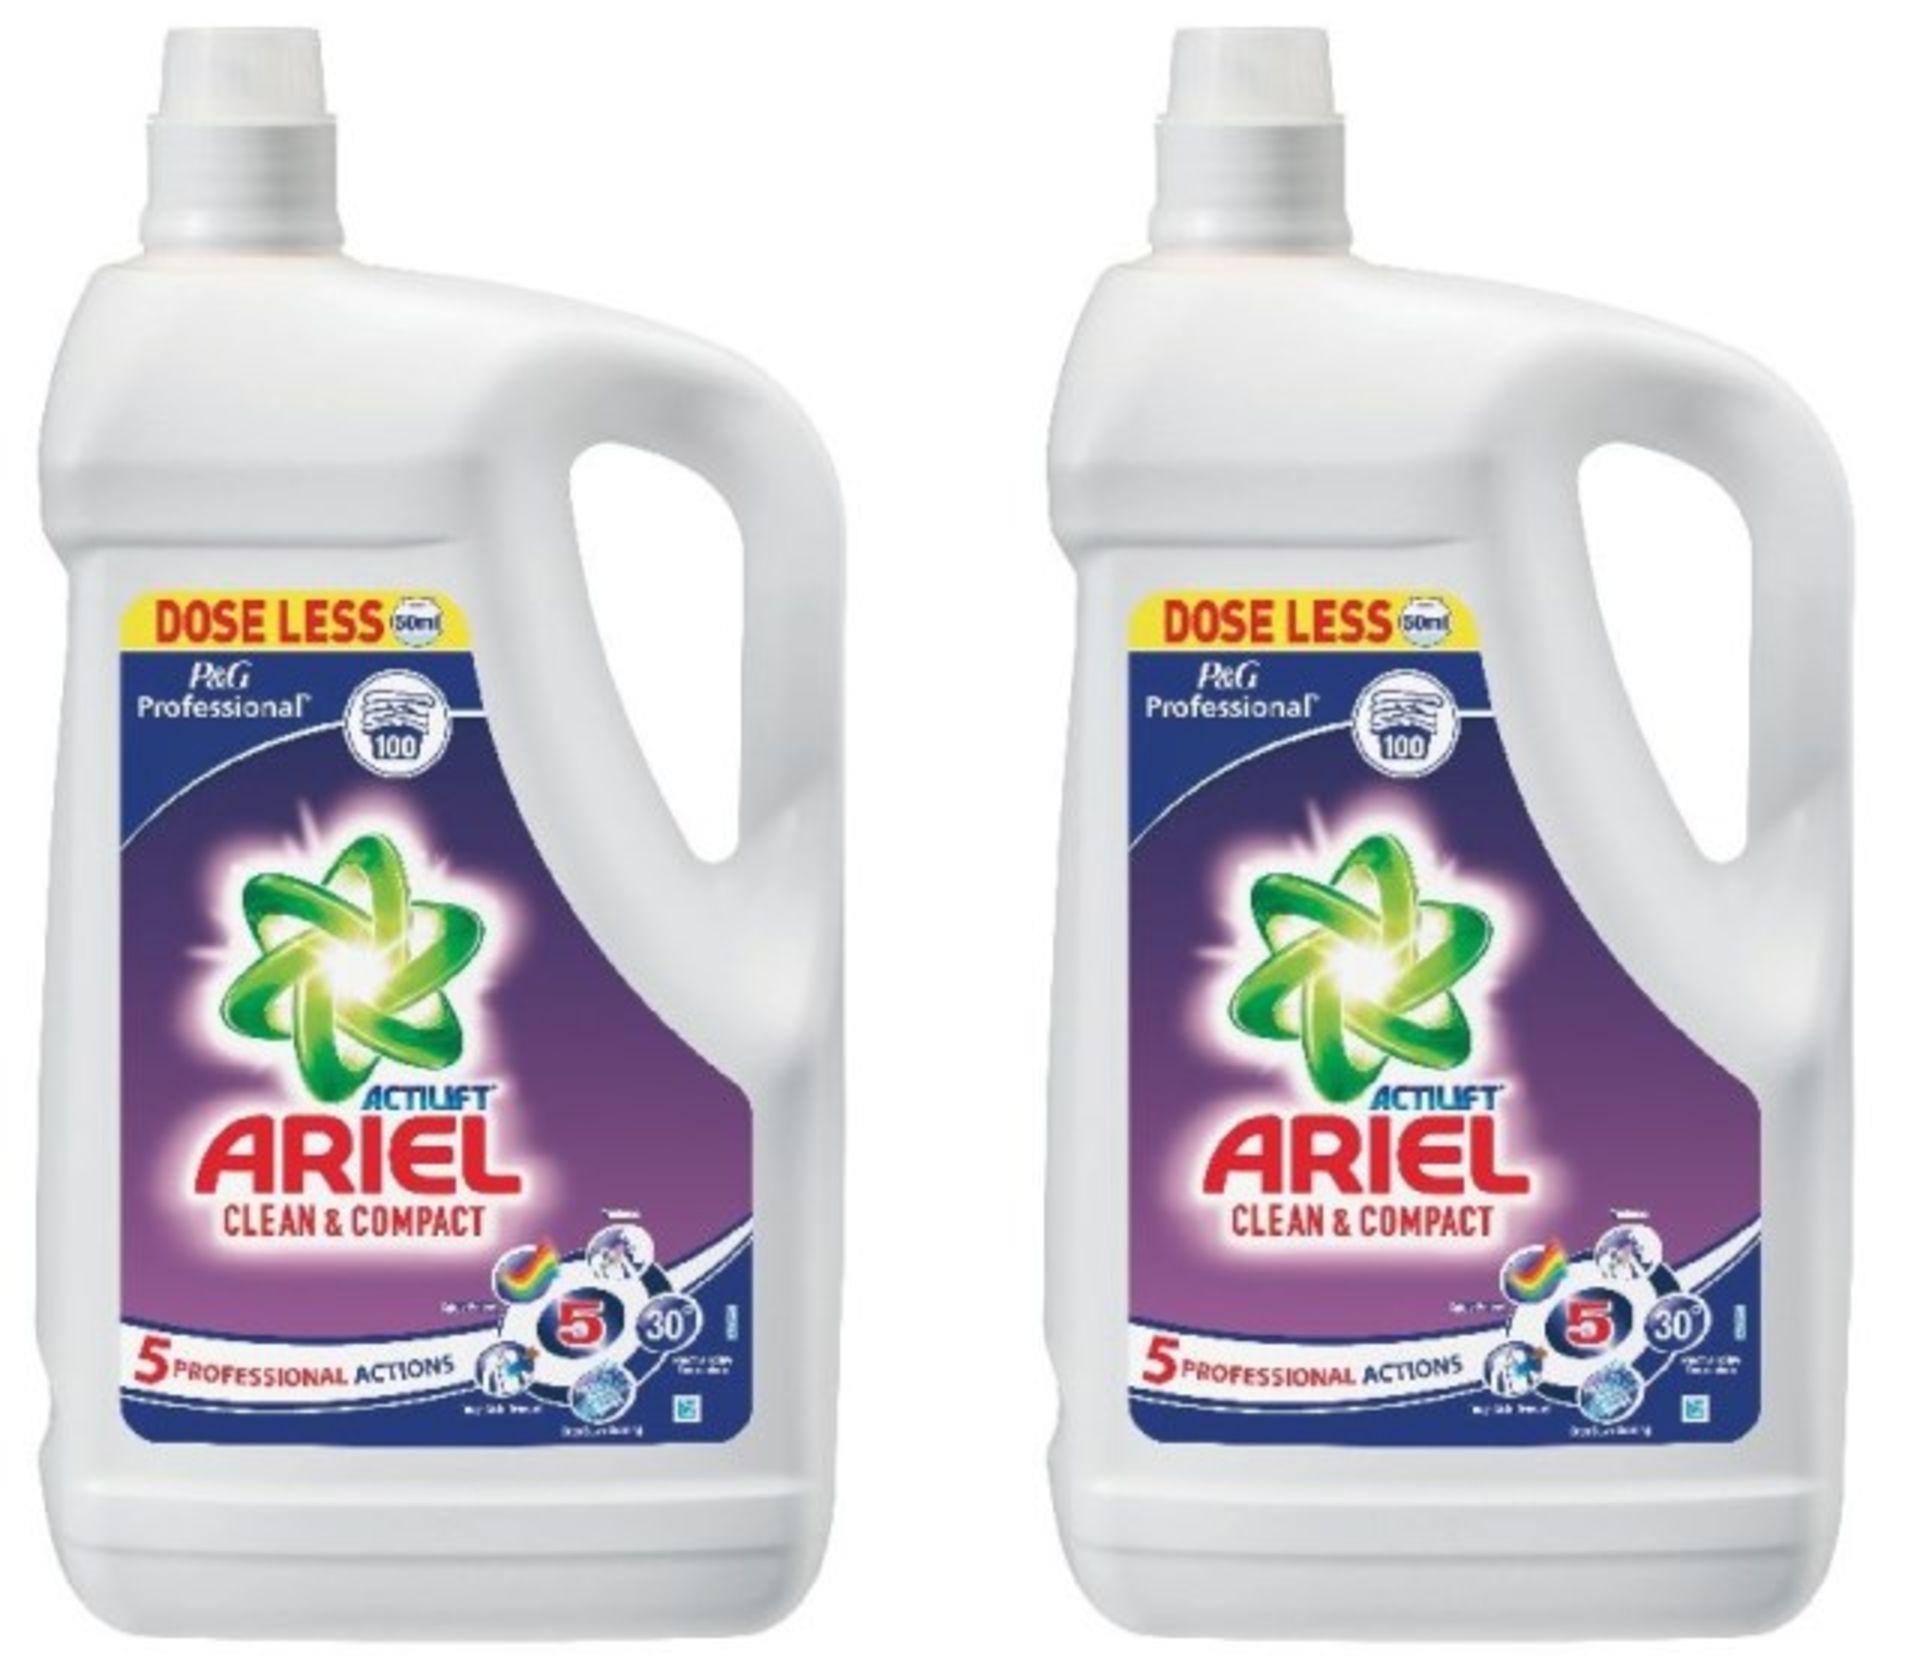 V Brand New 10 Litres (2 x 5 litre) Ariel Liquid Colour 5 Professional Actions 200 Washes RRP: £53.